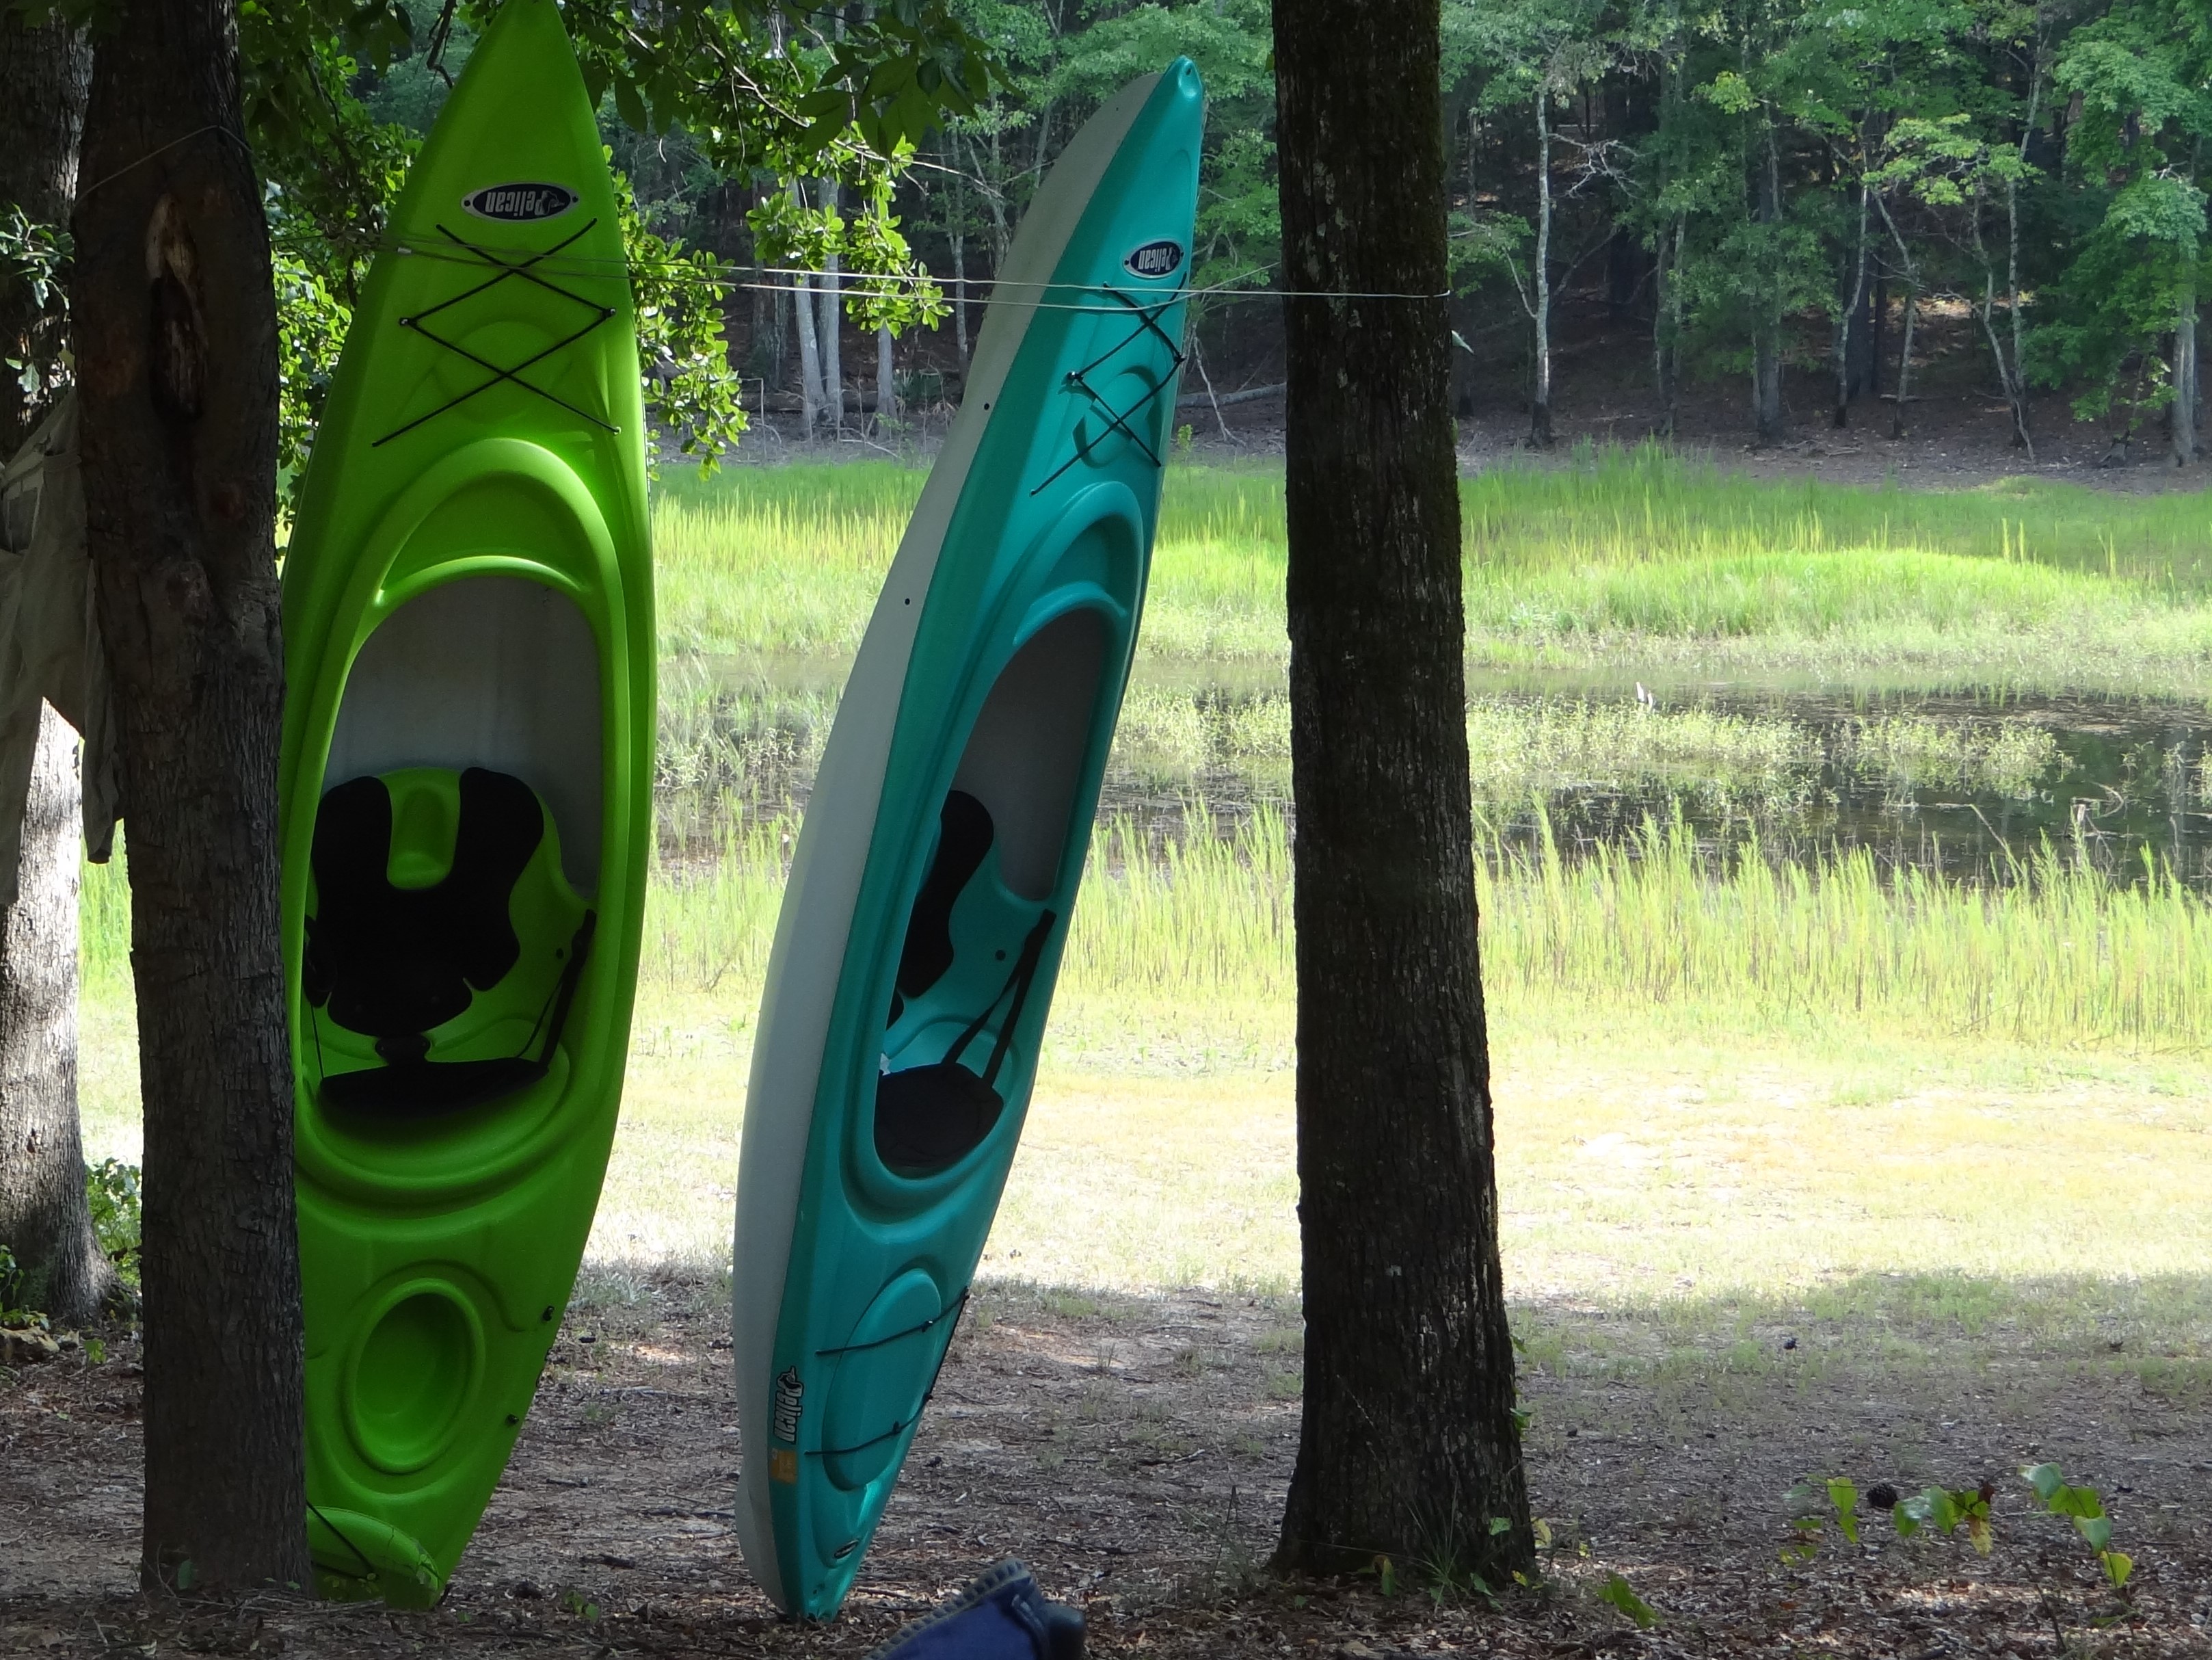 Kayaks propped on rope between 2 trees